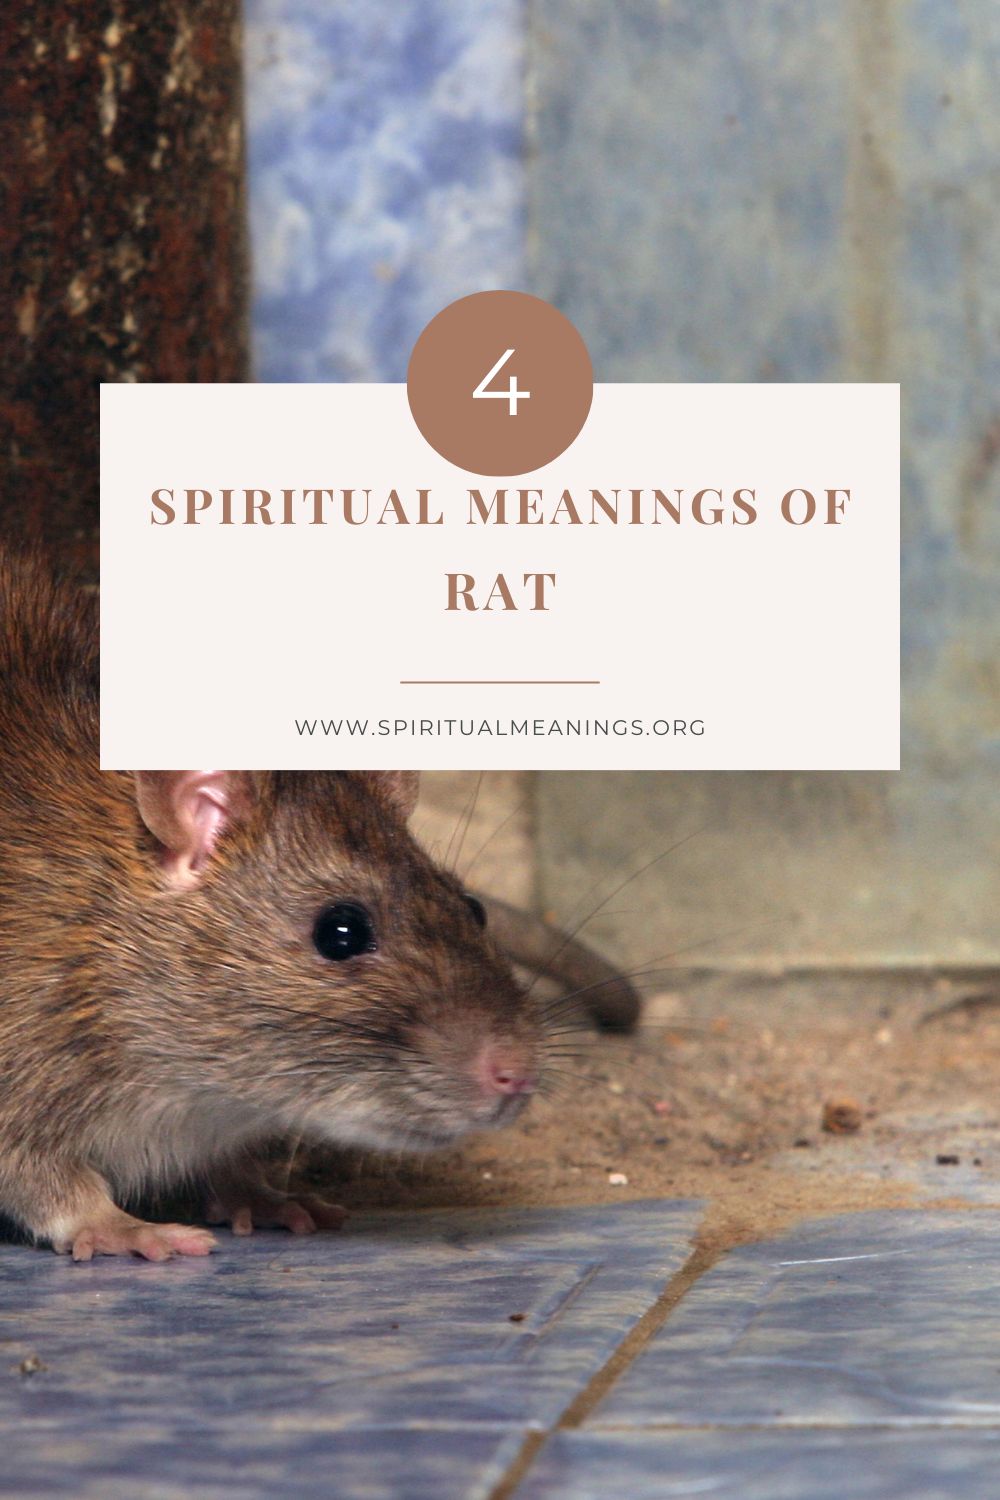 What Do Rats Symbolize